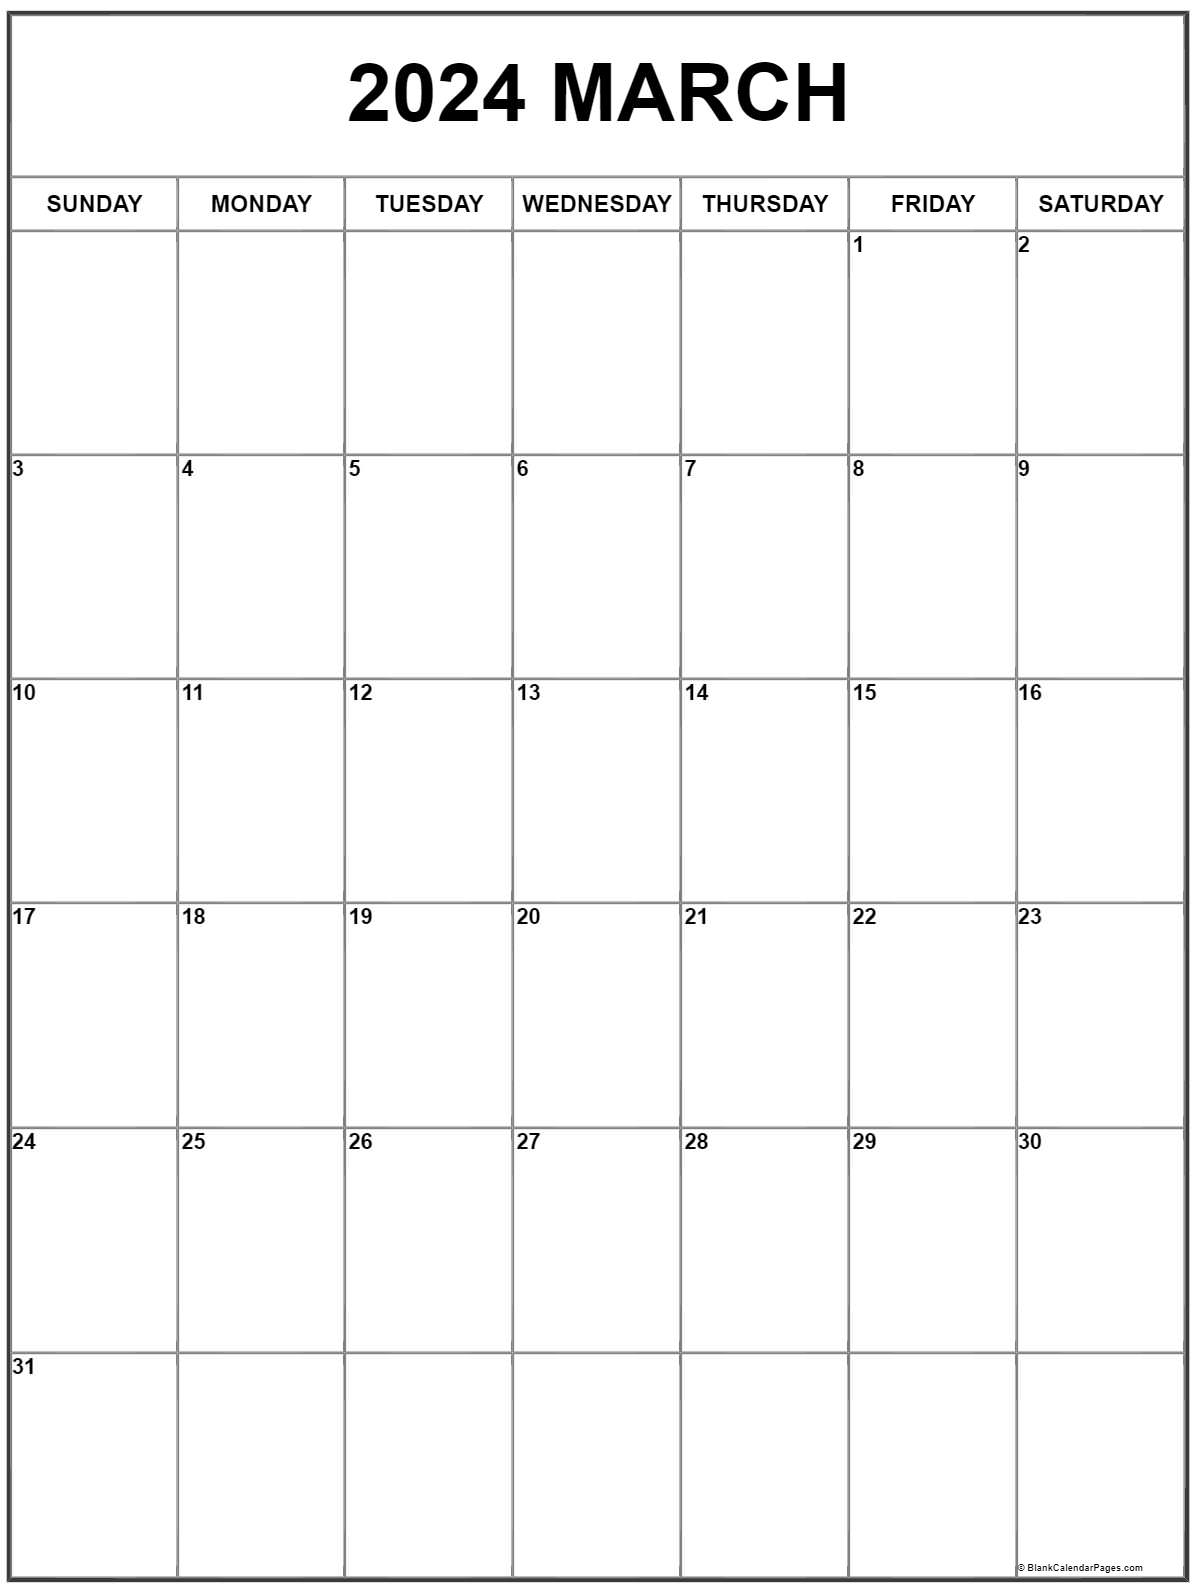 march-2023-calendar-vertical-get-calender-2023-update